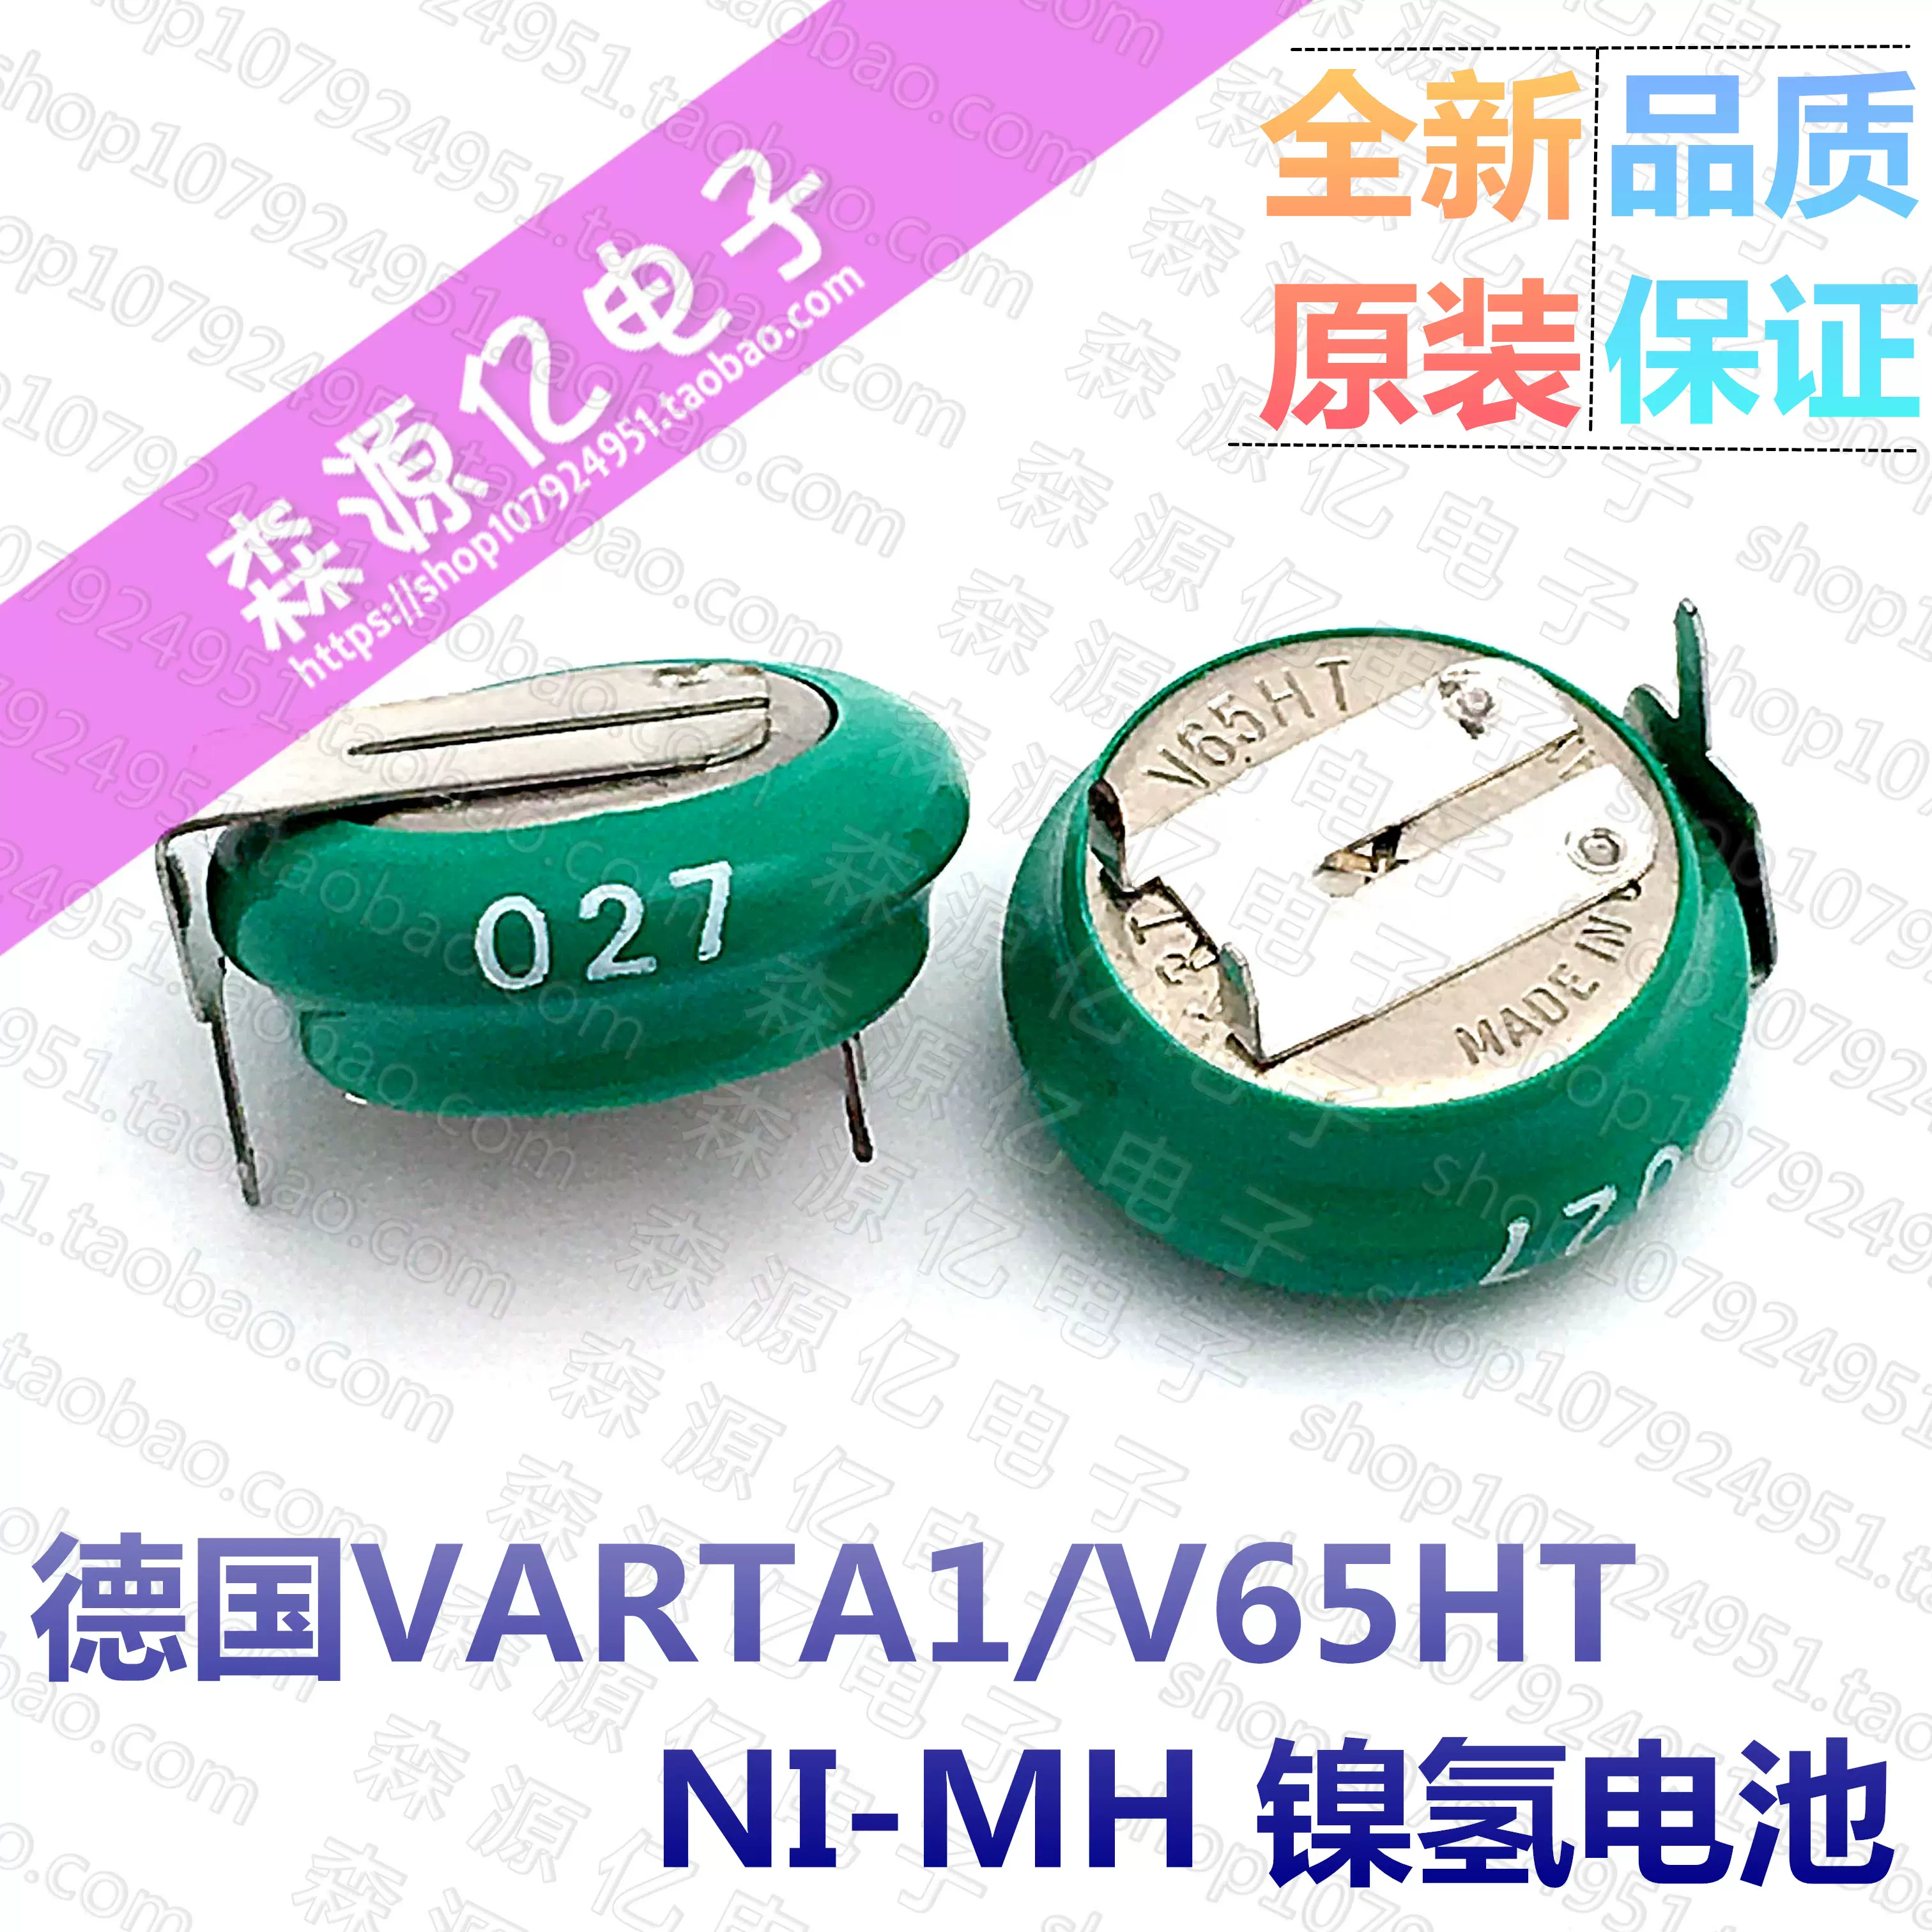 原装进口VARTA 电池1/V65HT BATTERY NI-MH 镍氢电池